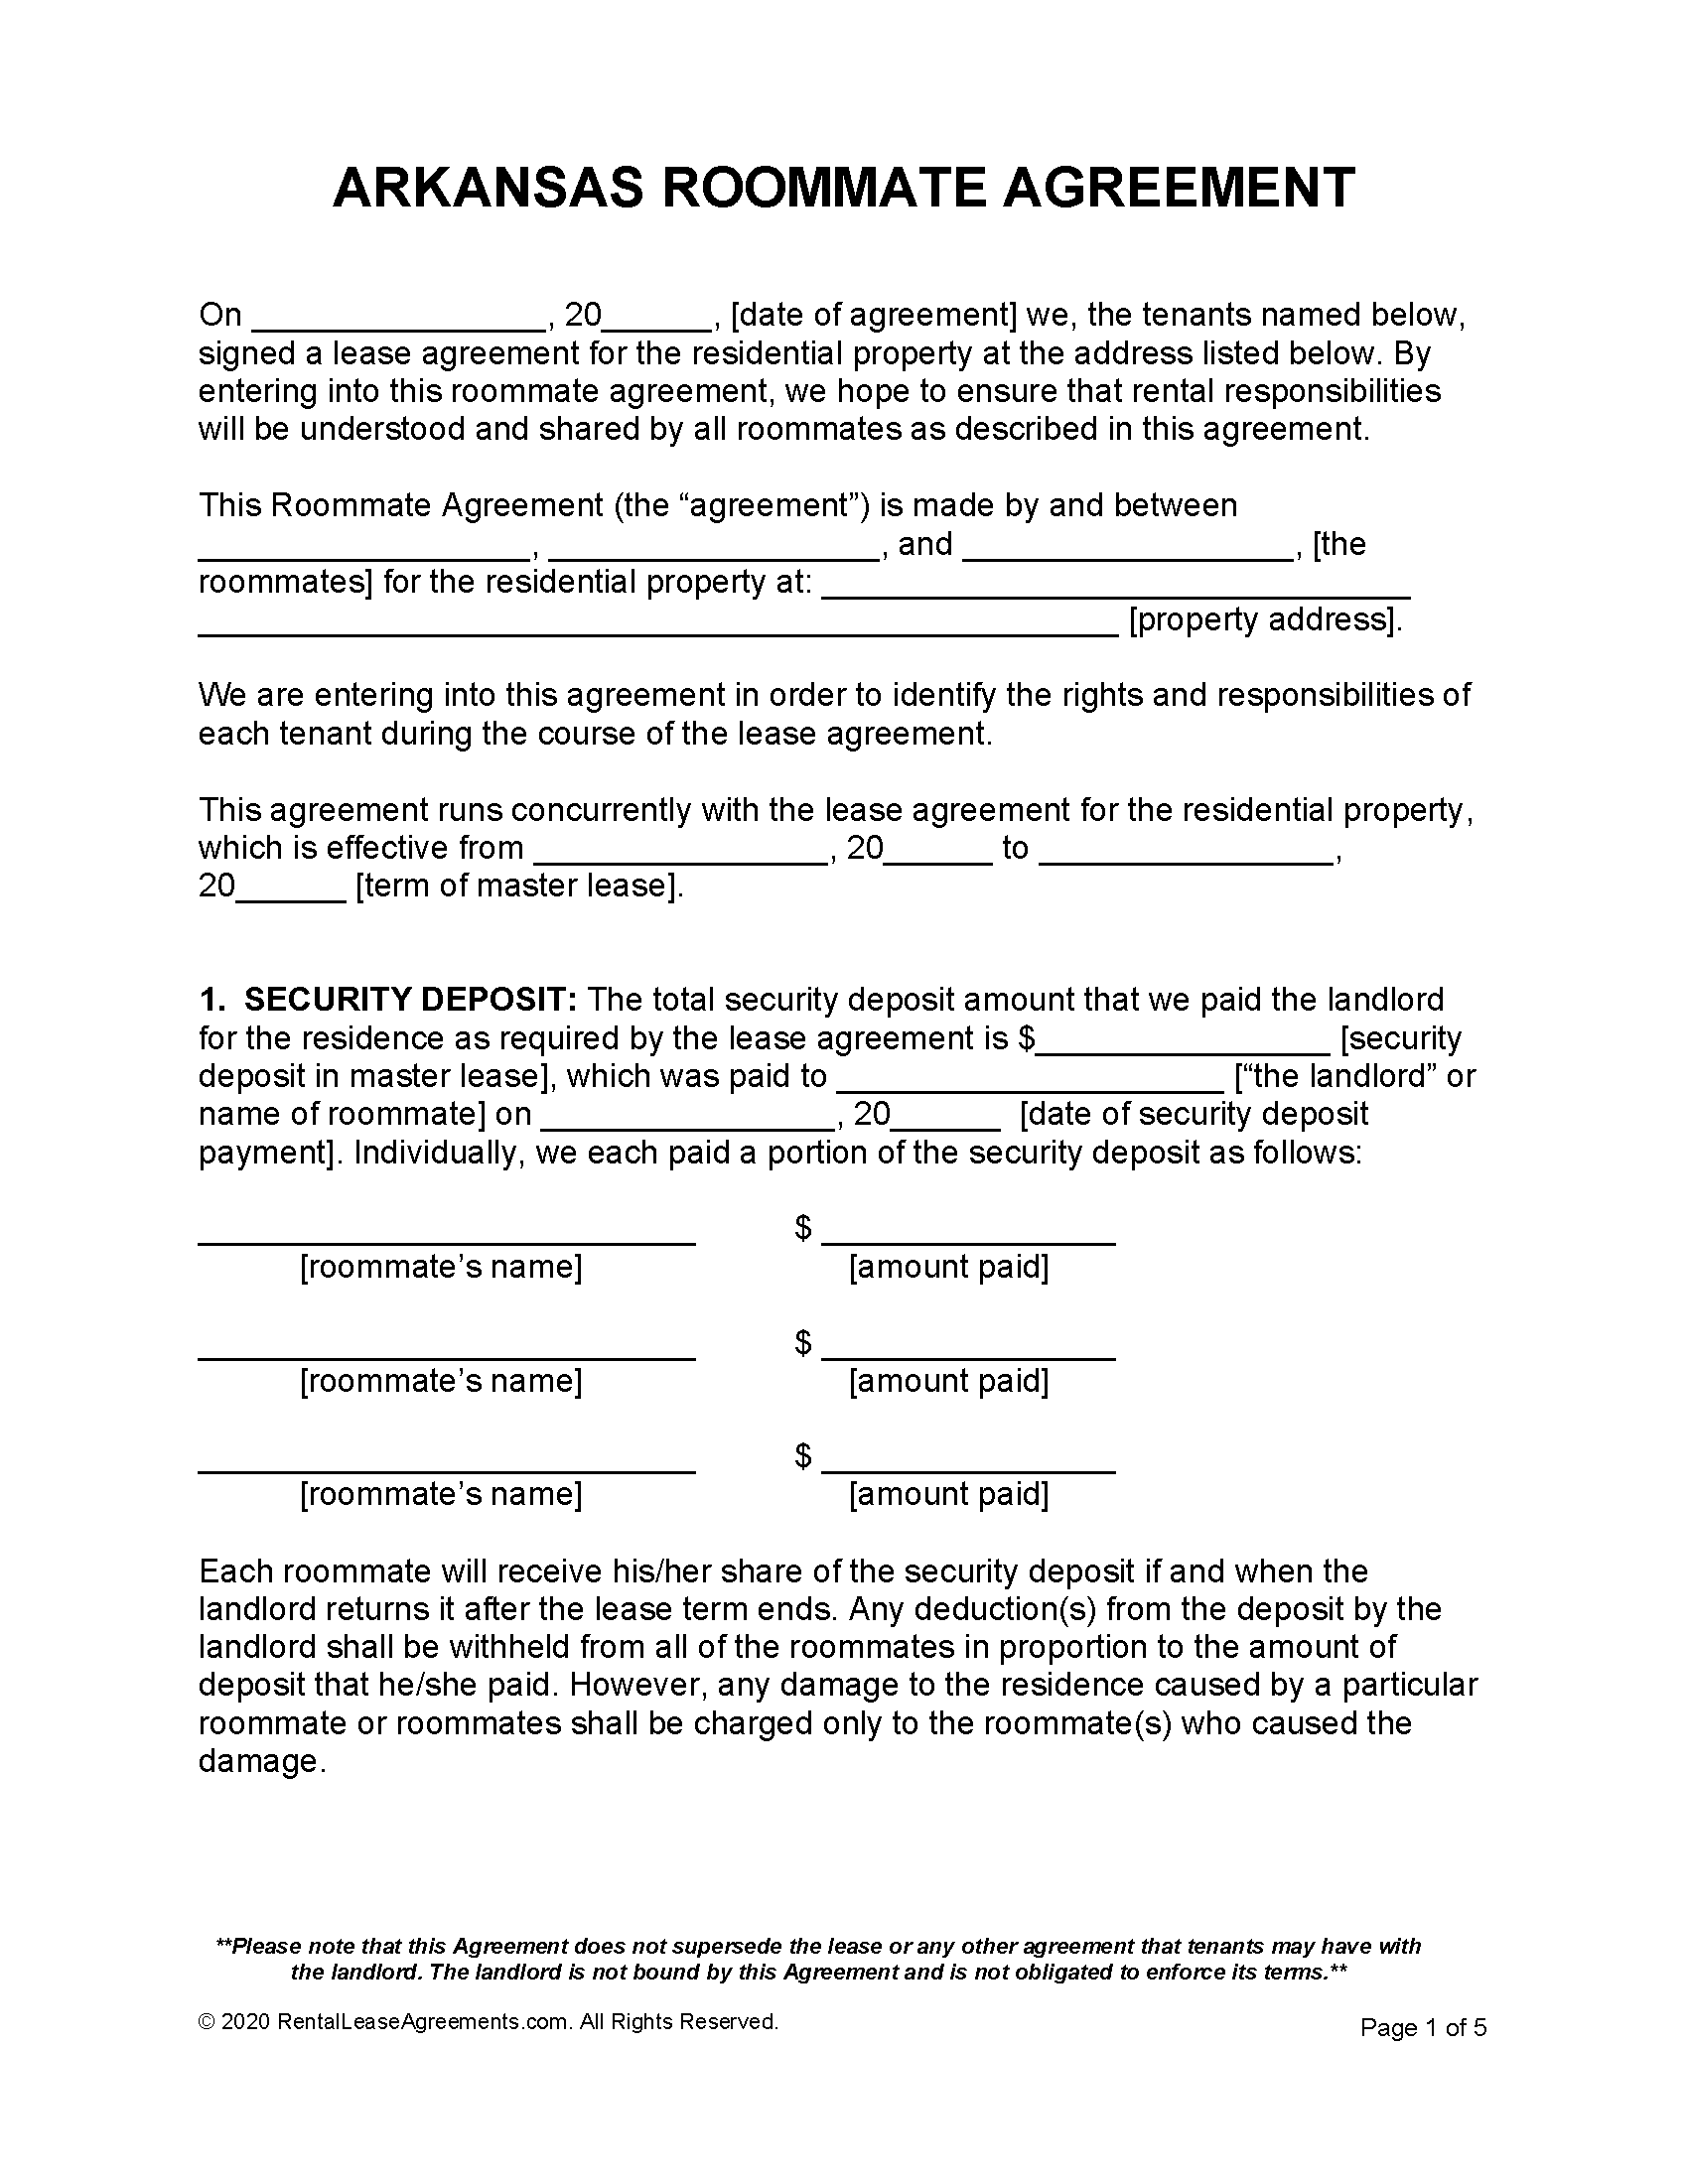 arkansas roommate agreement pdf ms word free printable rental